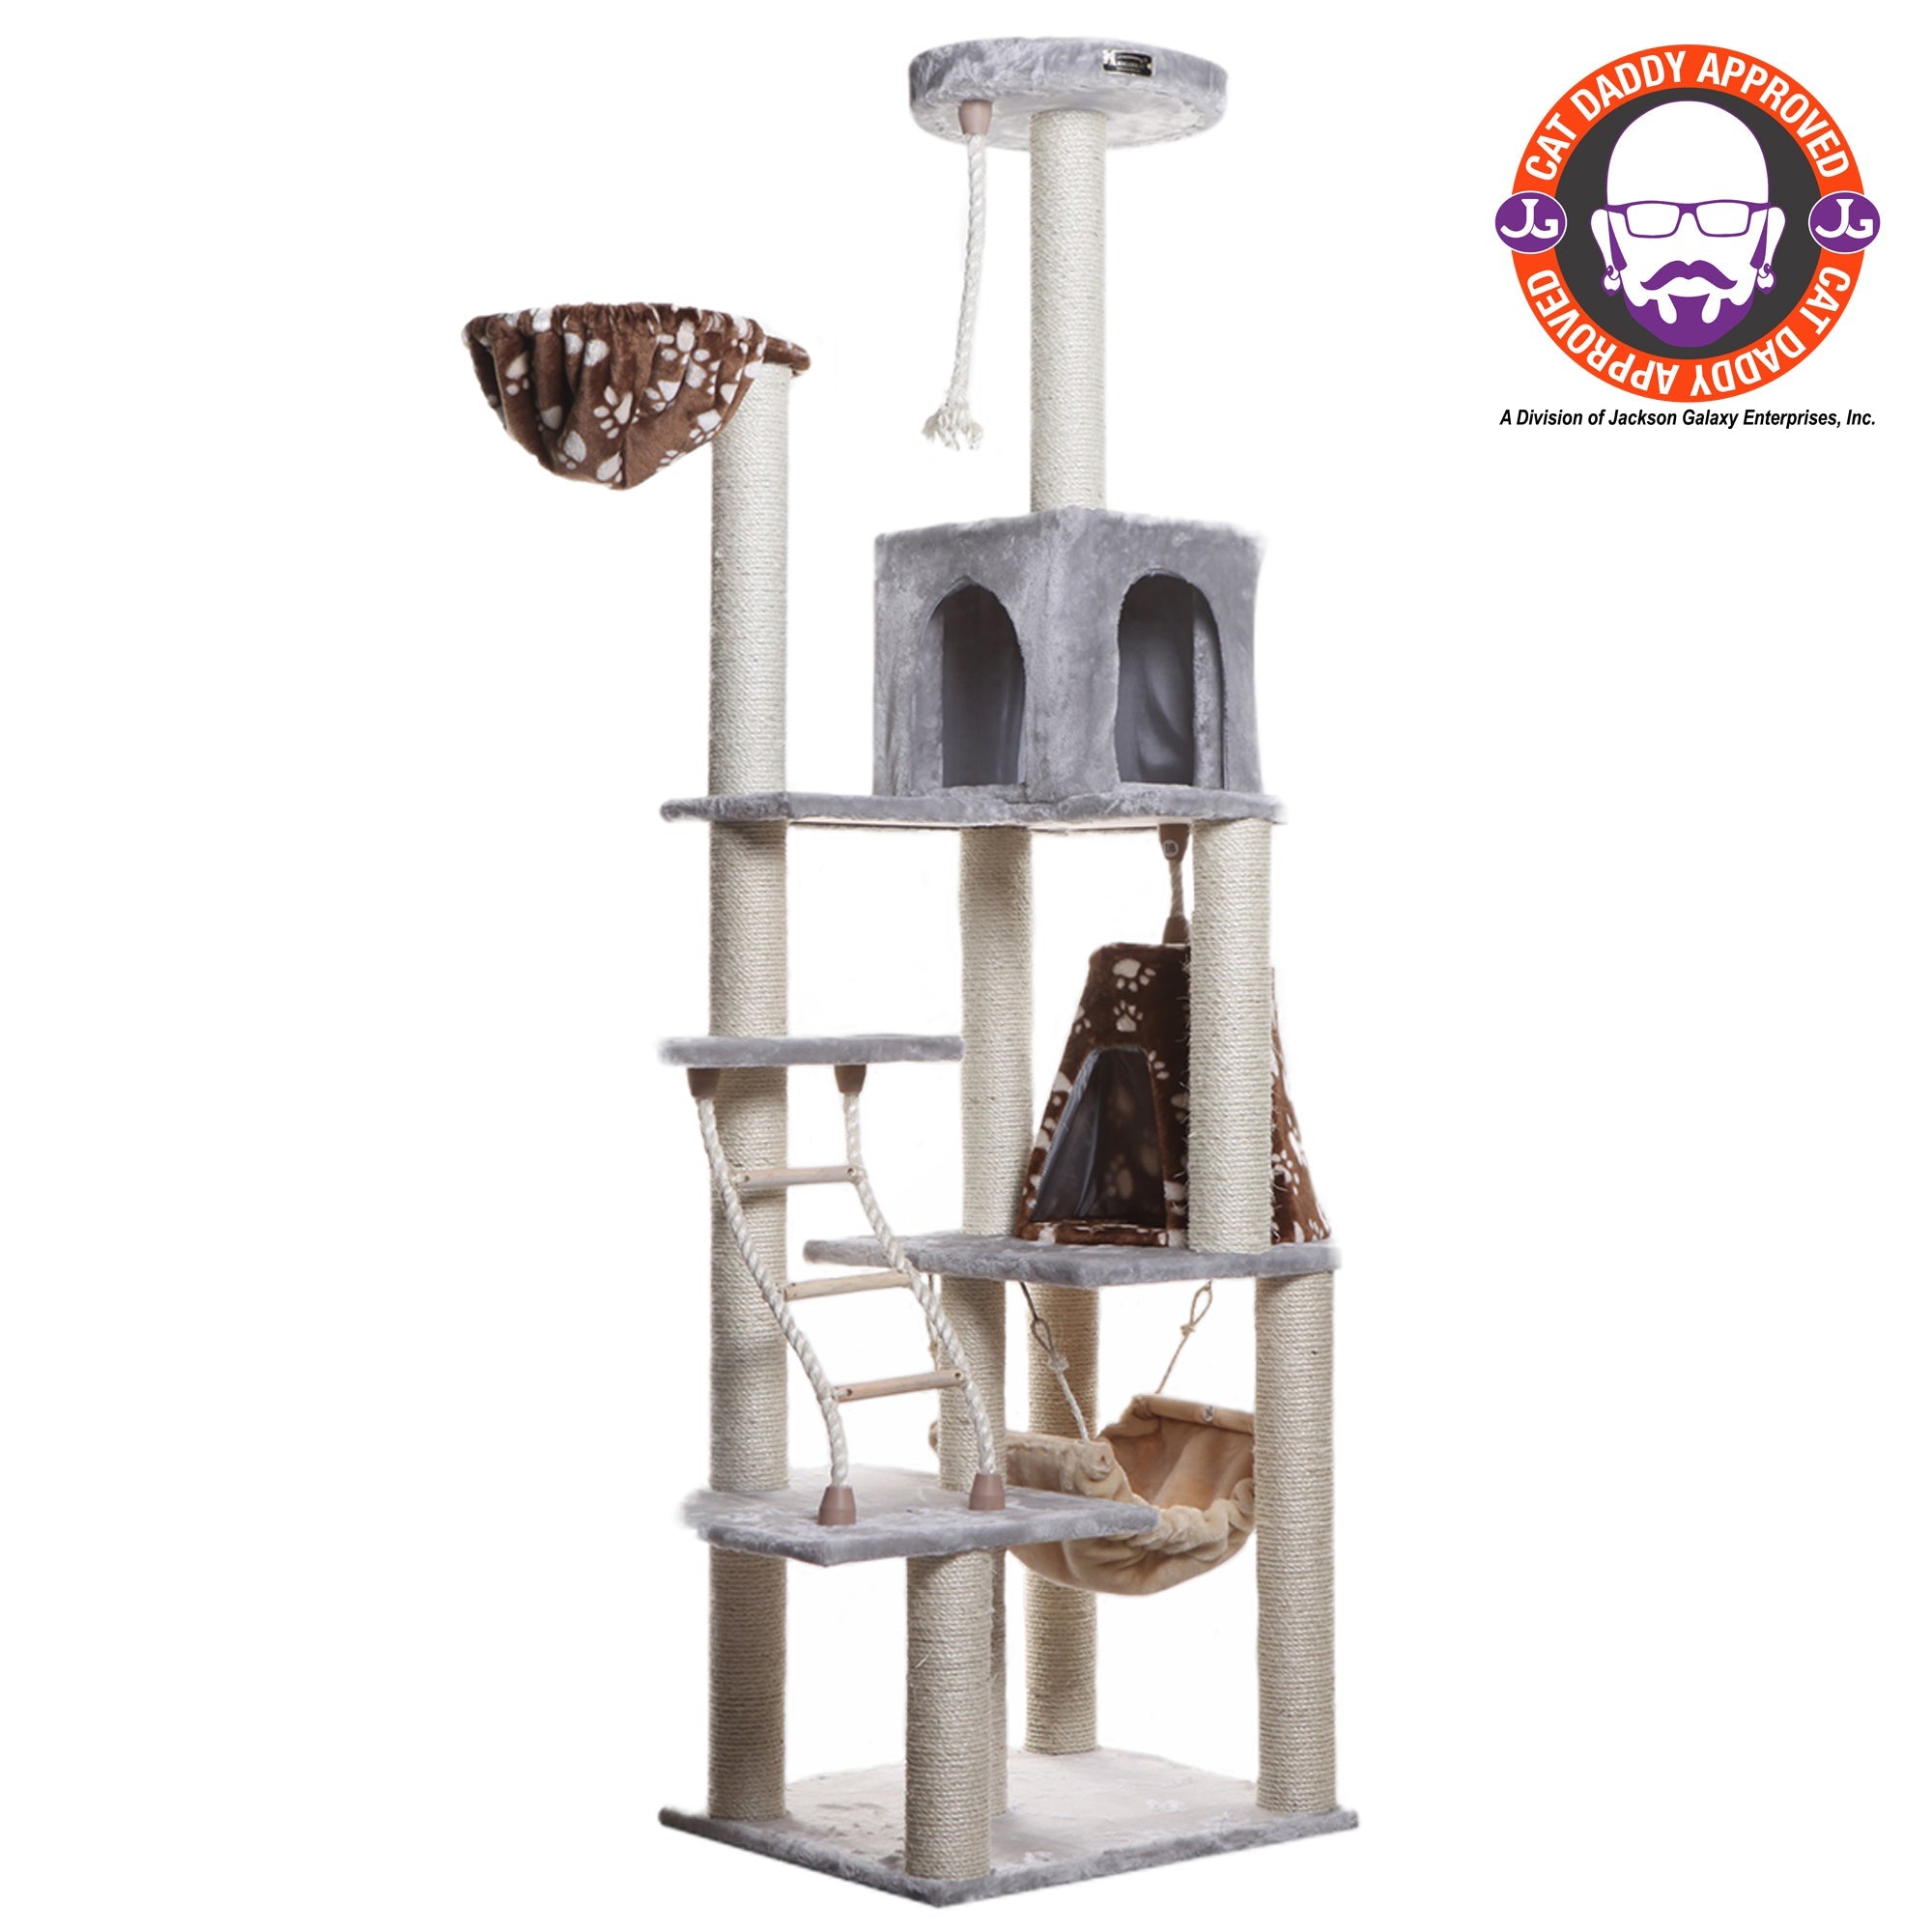 Armarkat Cat Climber Play House, A7802 Cat furniture With Playhouse,Lounge Basket